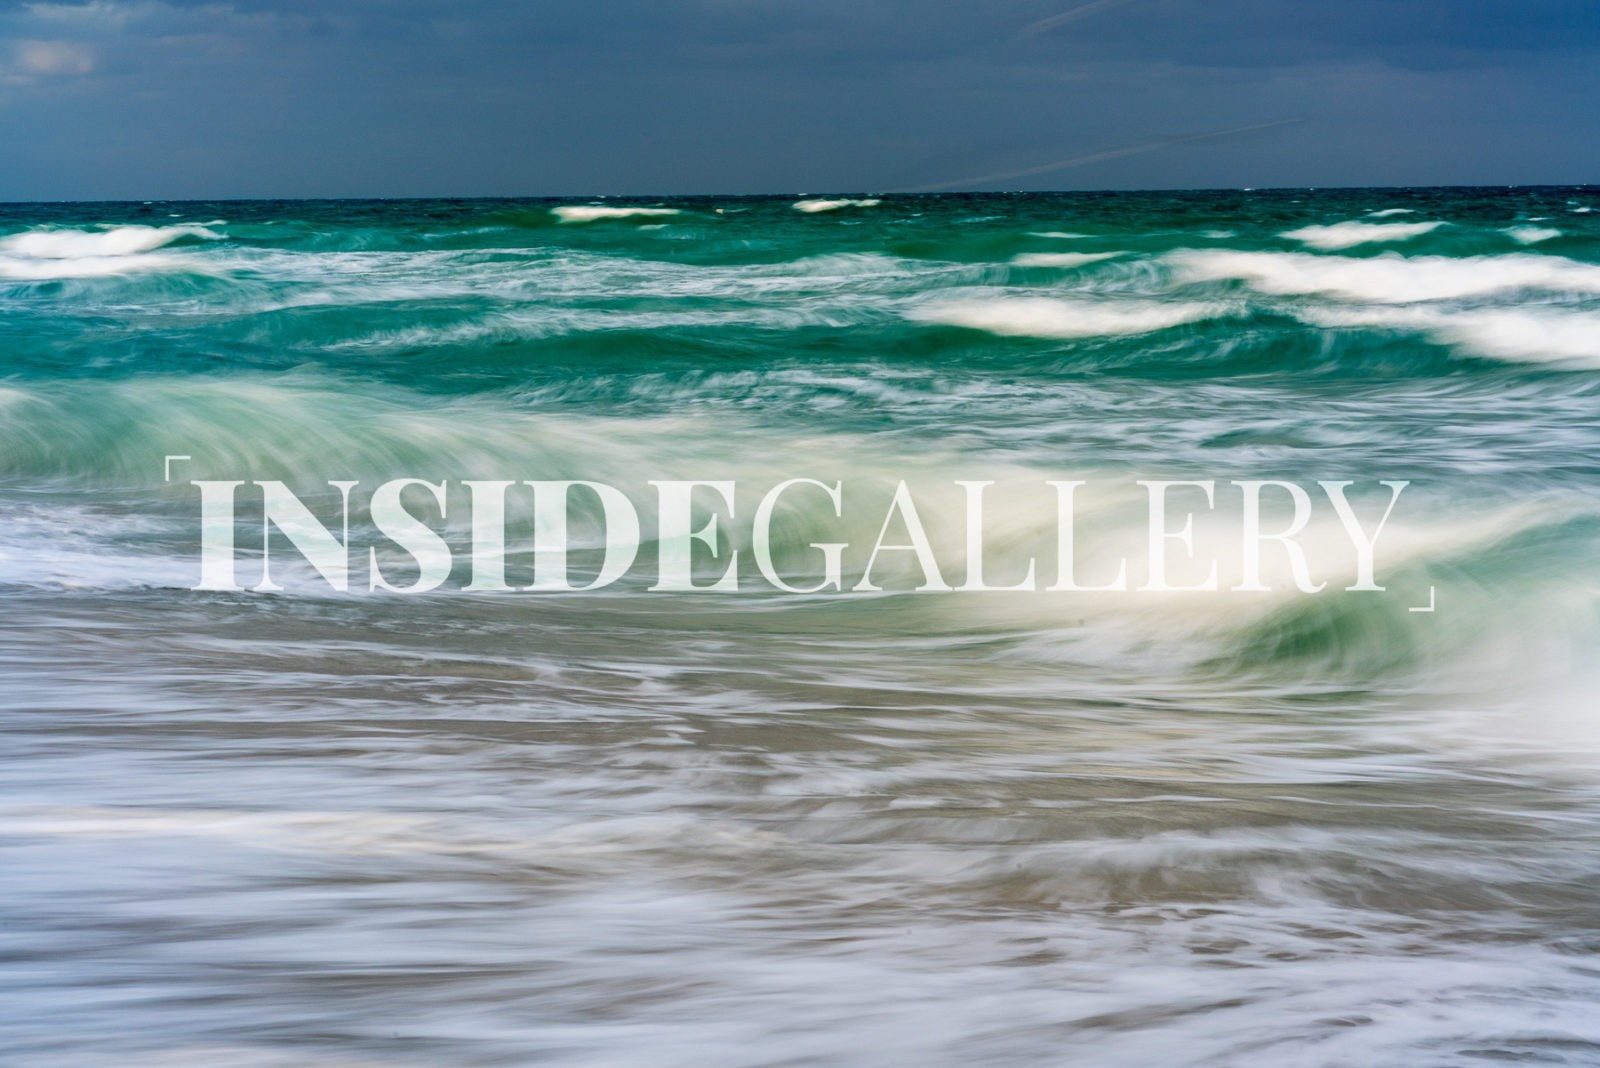 Fine art photography | Miami Beach Wave